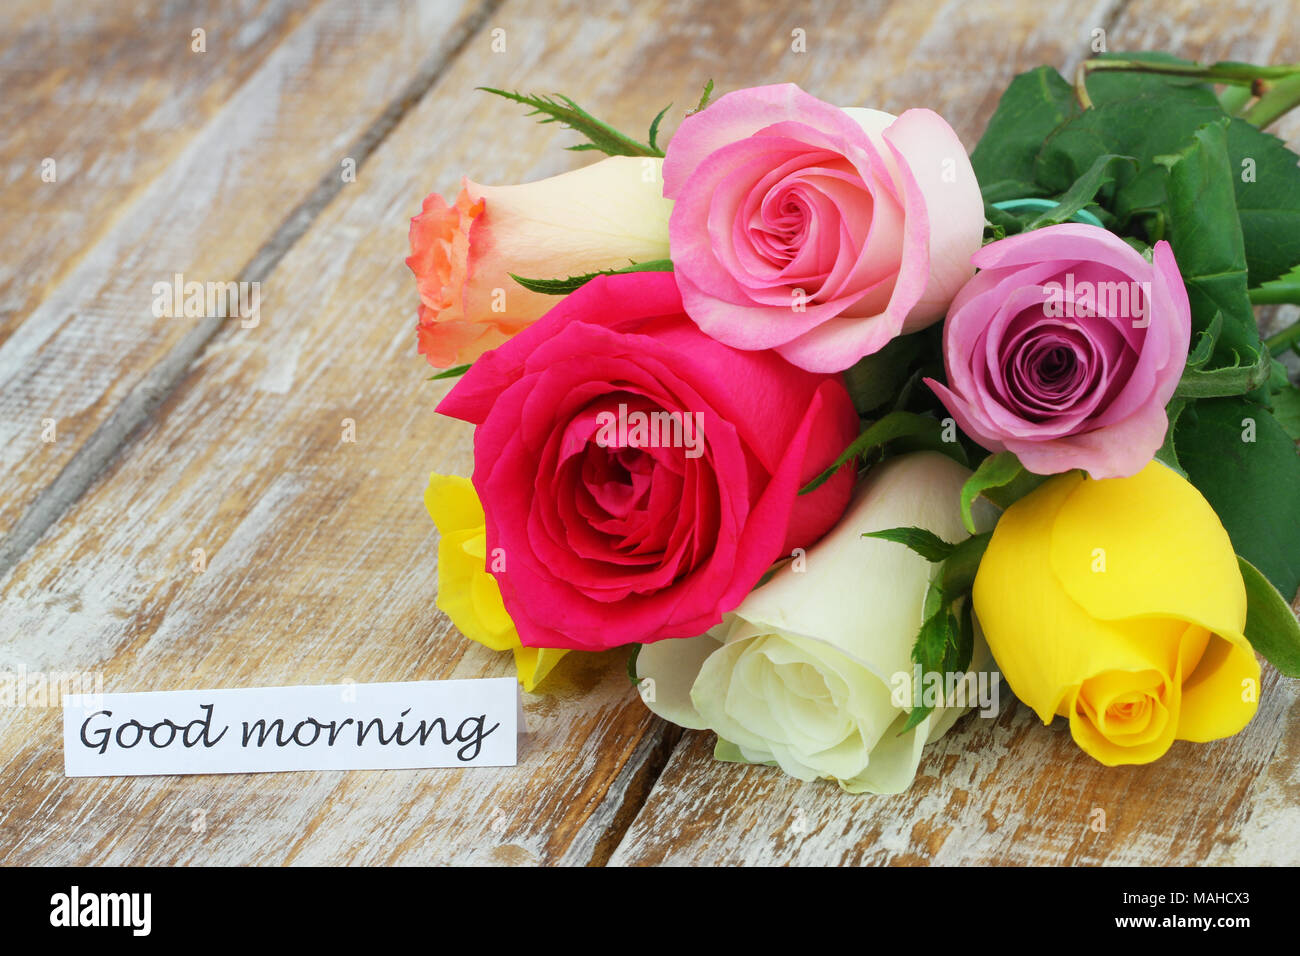 Flower Rose Good Morning Image  